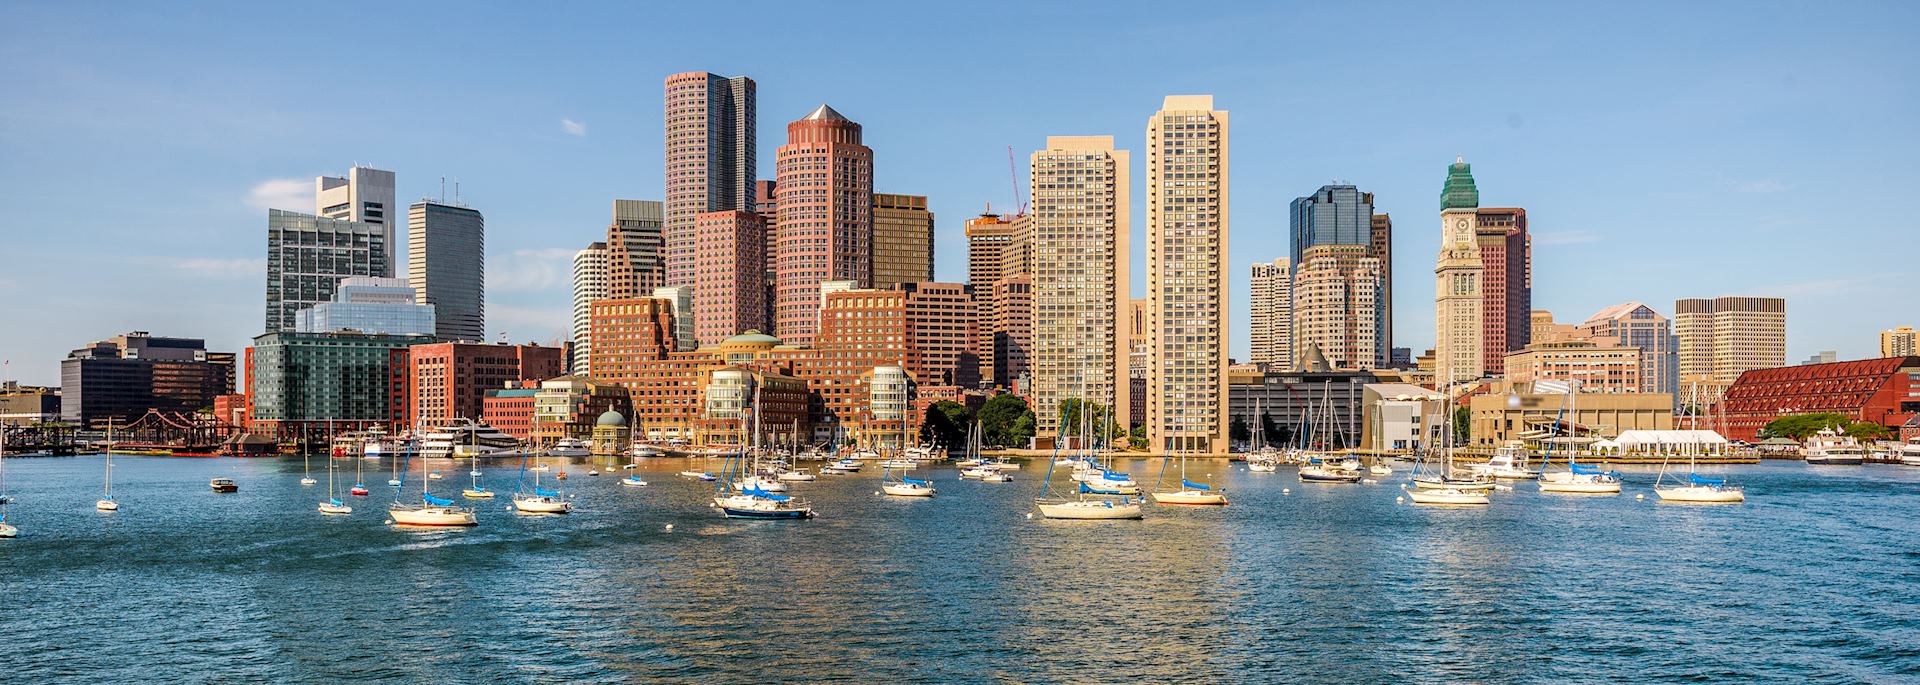 Boston waterfront, Massachusetts